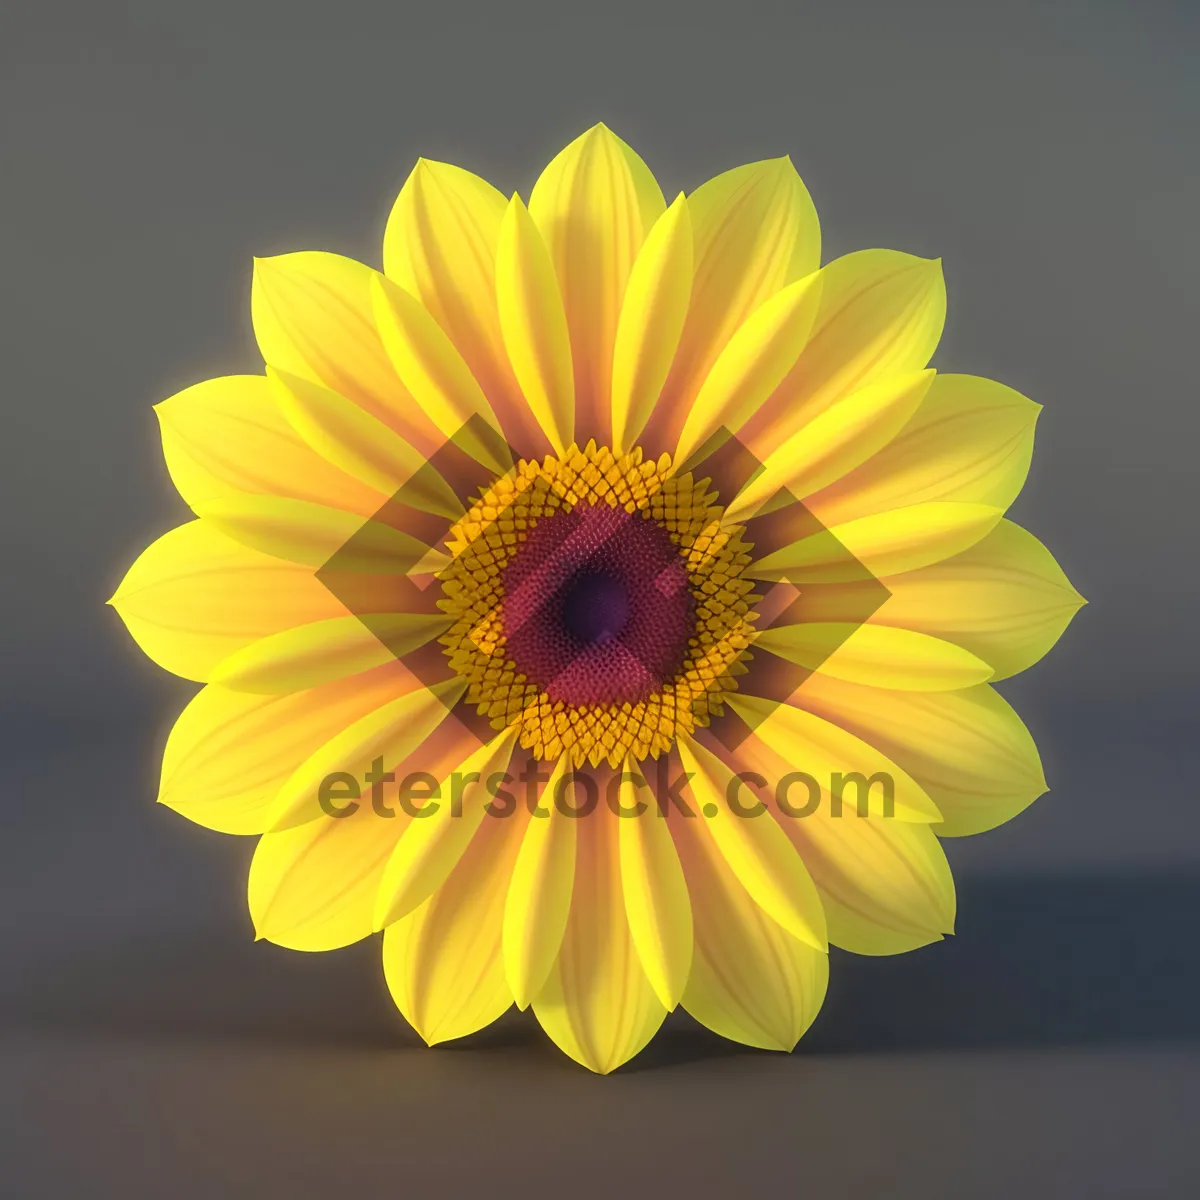 Picture of Vibrant Sunflower Blossom in Full Bloom.